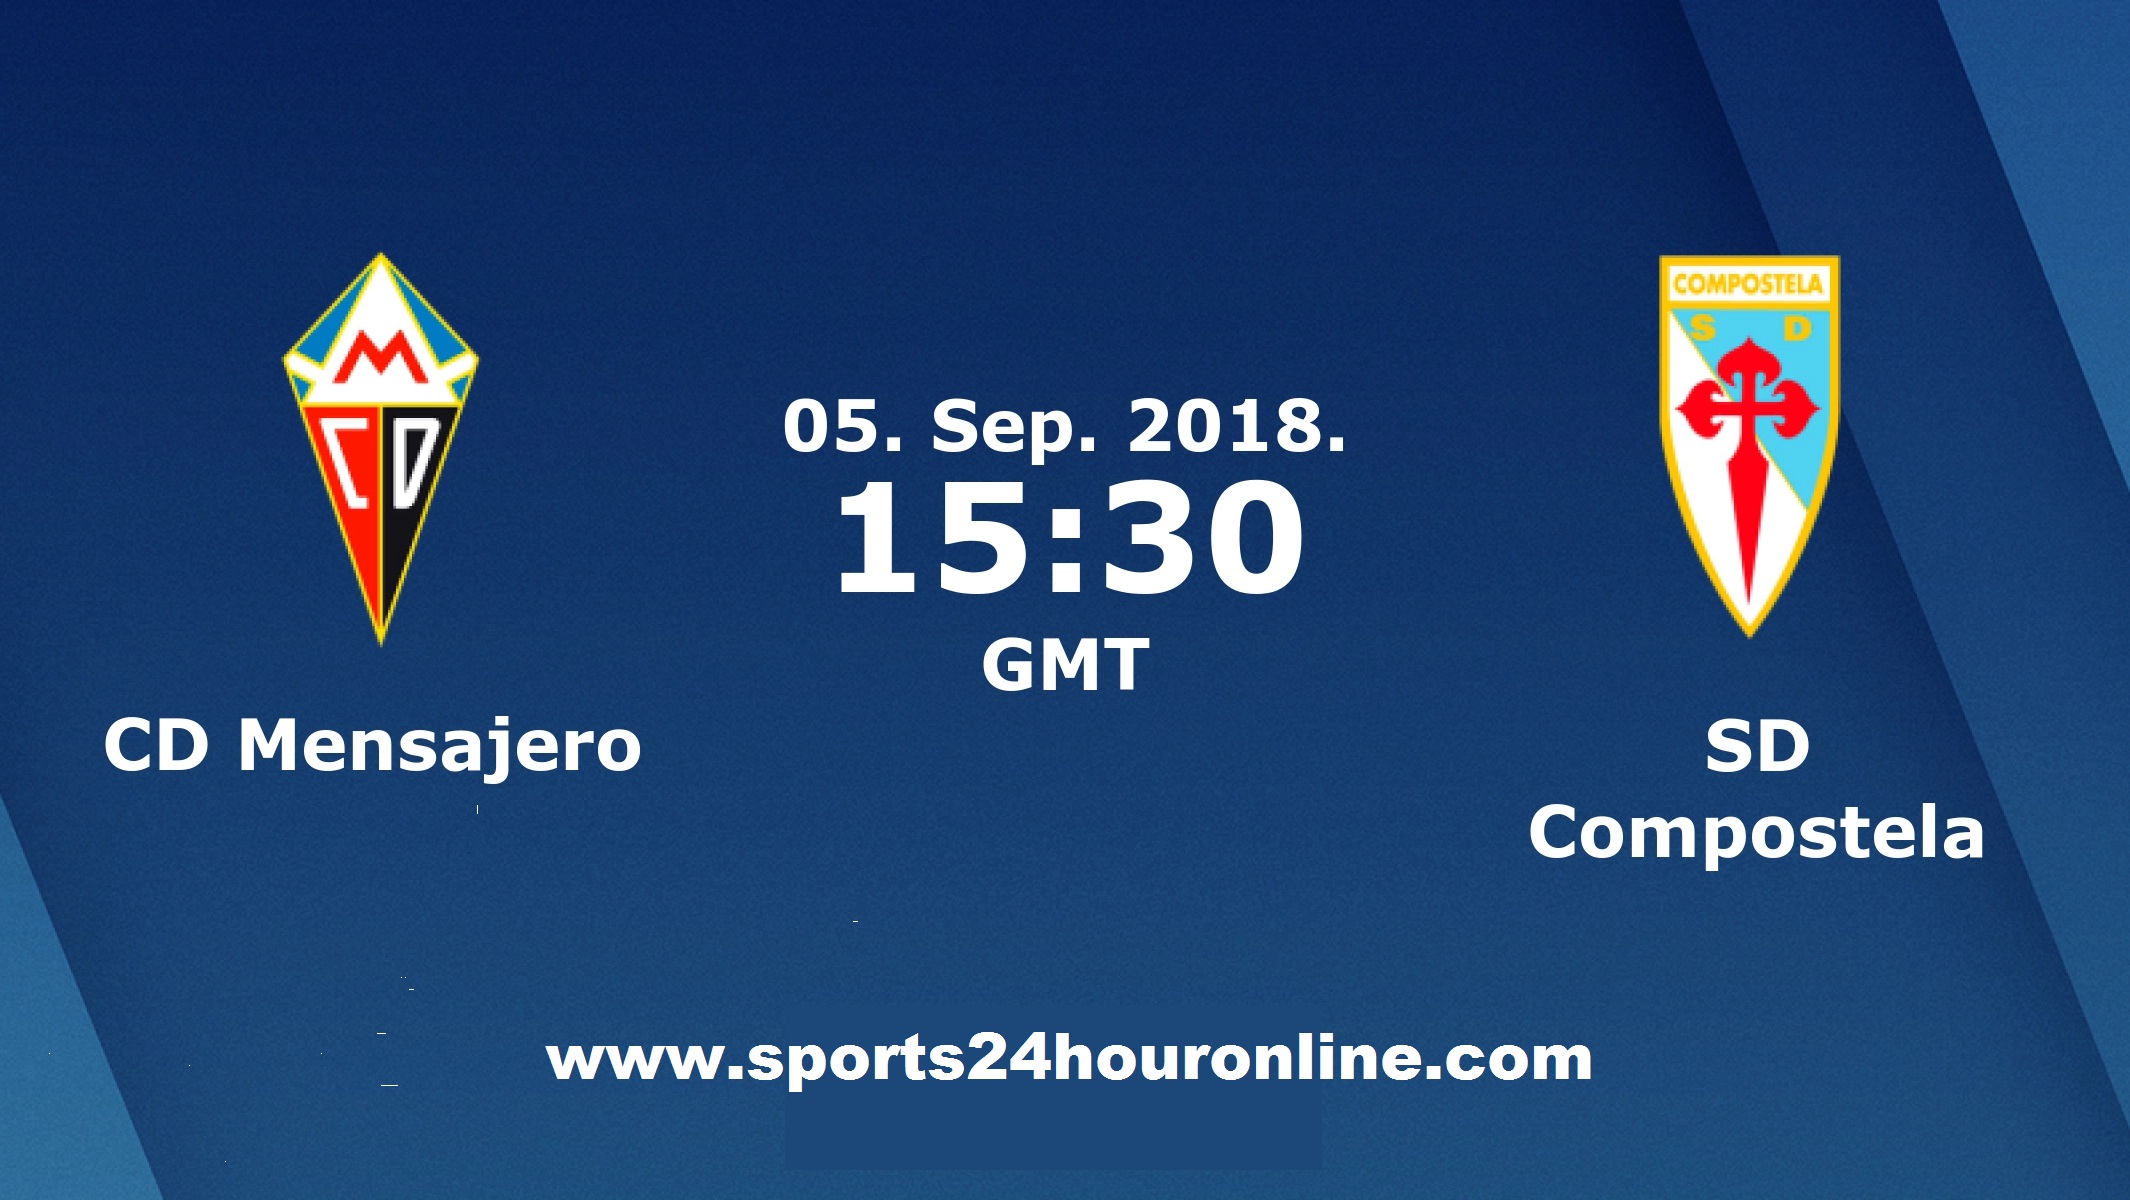 Mensajero vs Compostela Live Streaming Football Match of Copa Del Rey